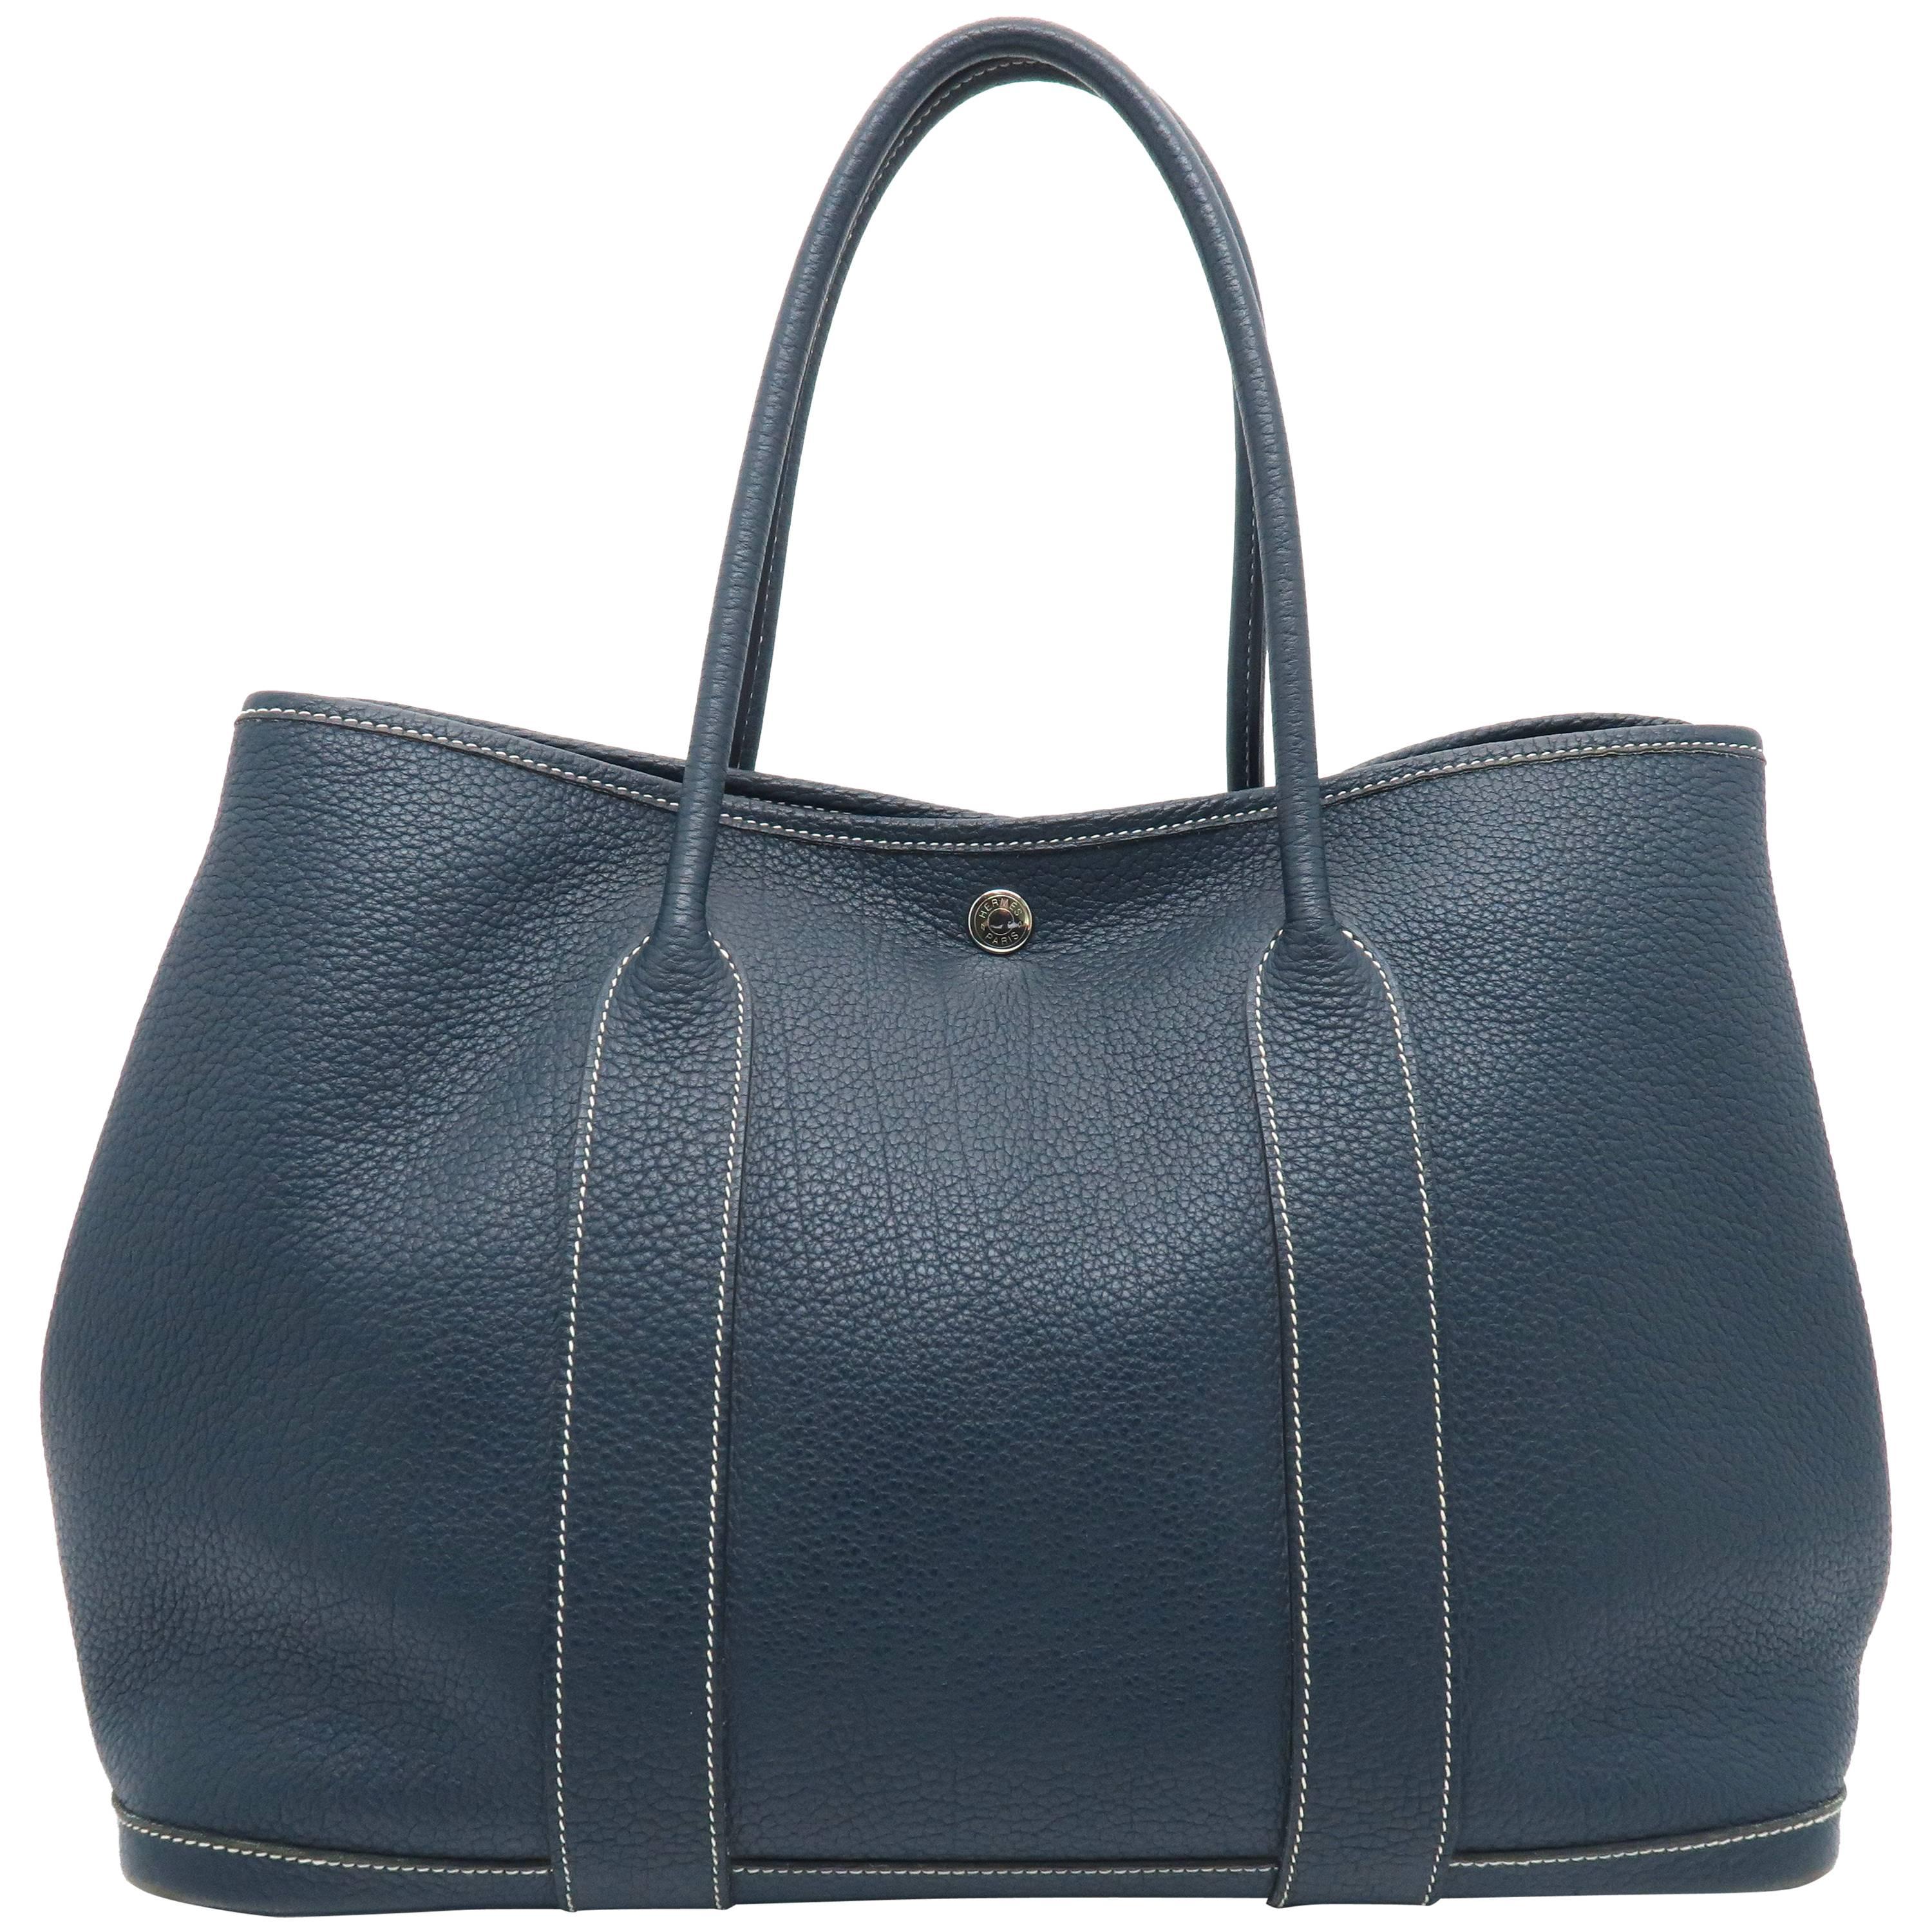 Hermes Garden Party PM Bleu De Presse Blue Togo Leather Tote Bag For Sale